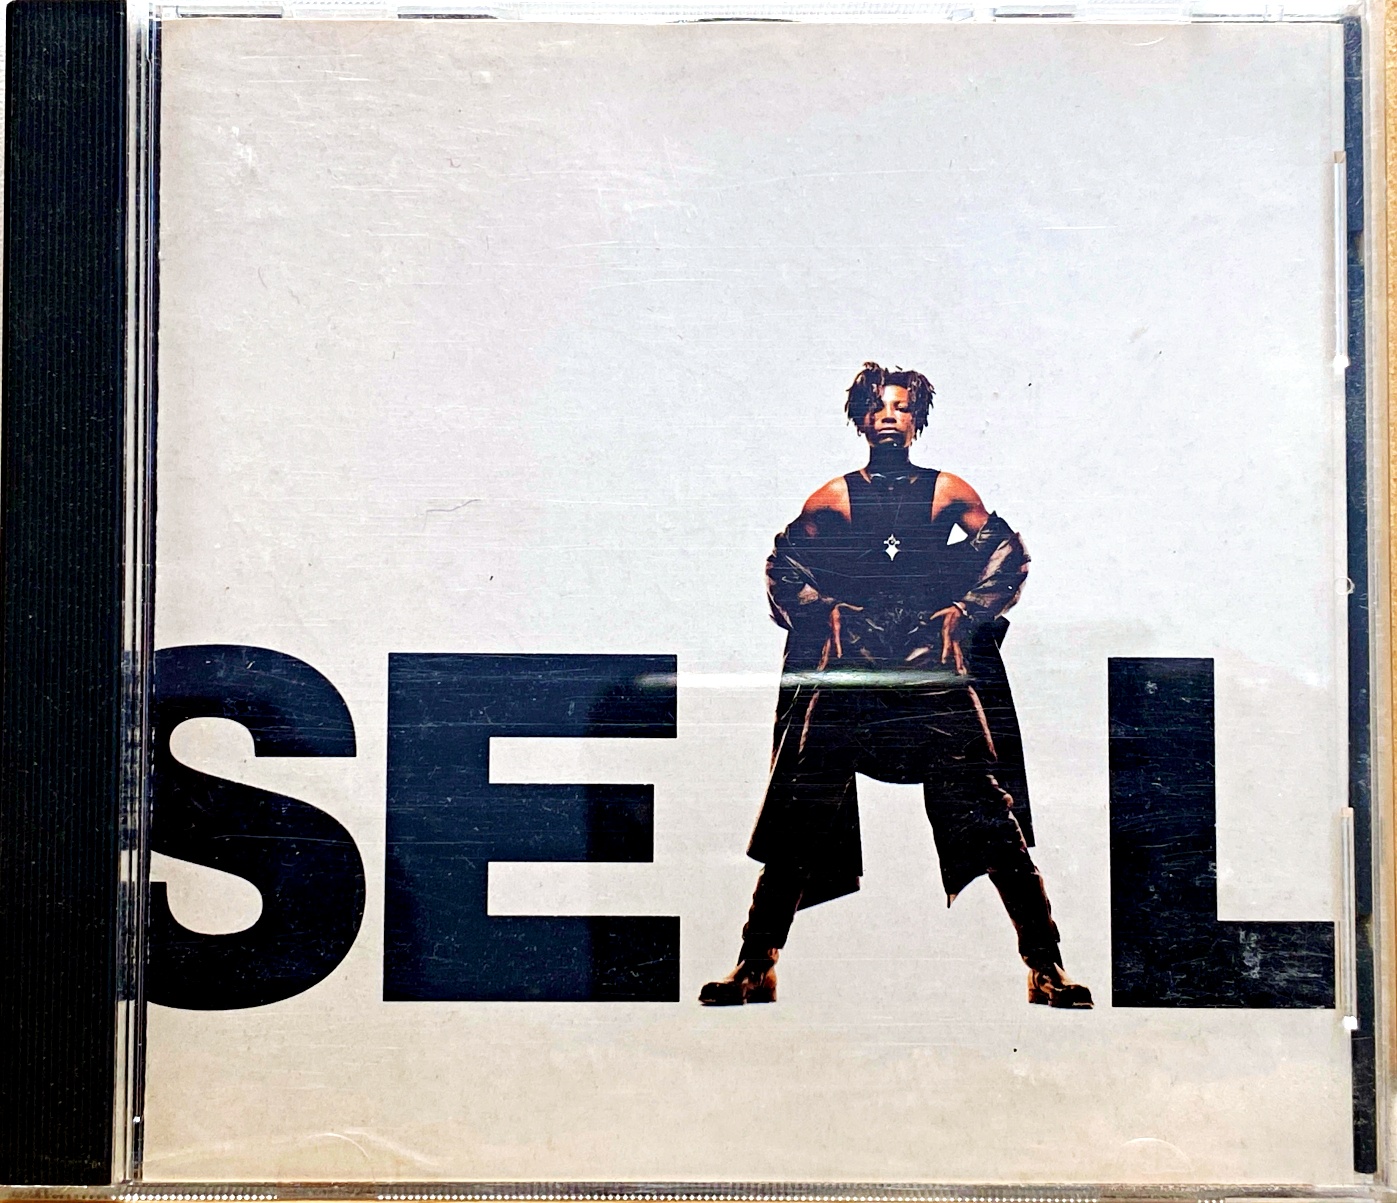 CD Seal – Seal